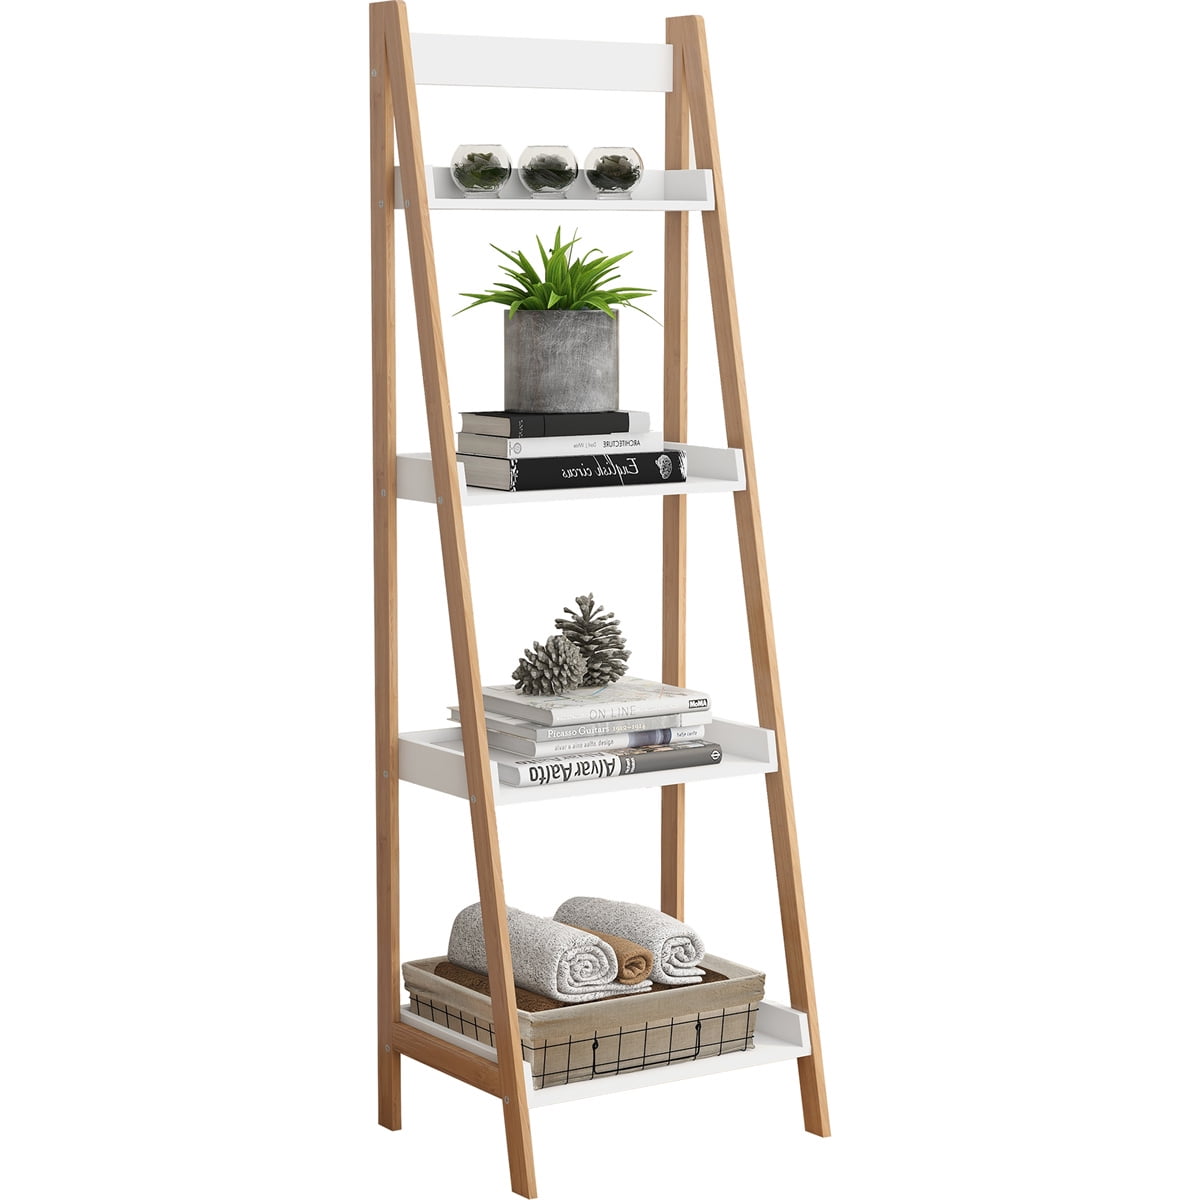 Details about   4-Tier Multifunction Ladder Bookshelf Bookcase Storage Plants Display Rack Hold 